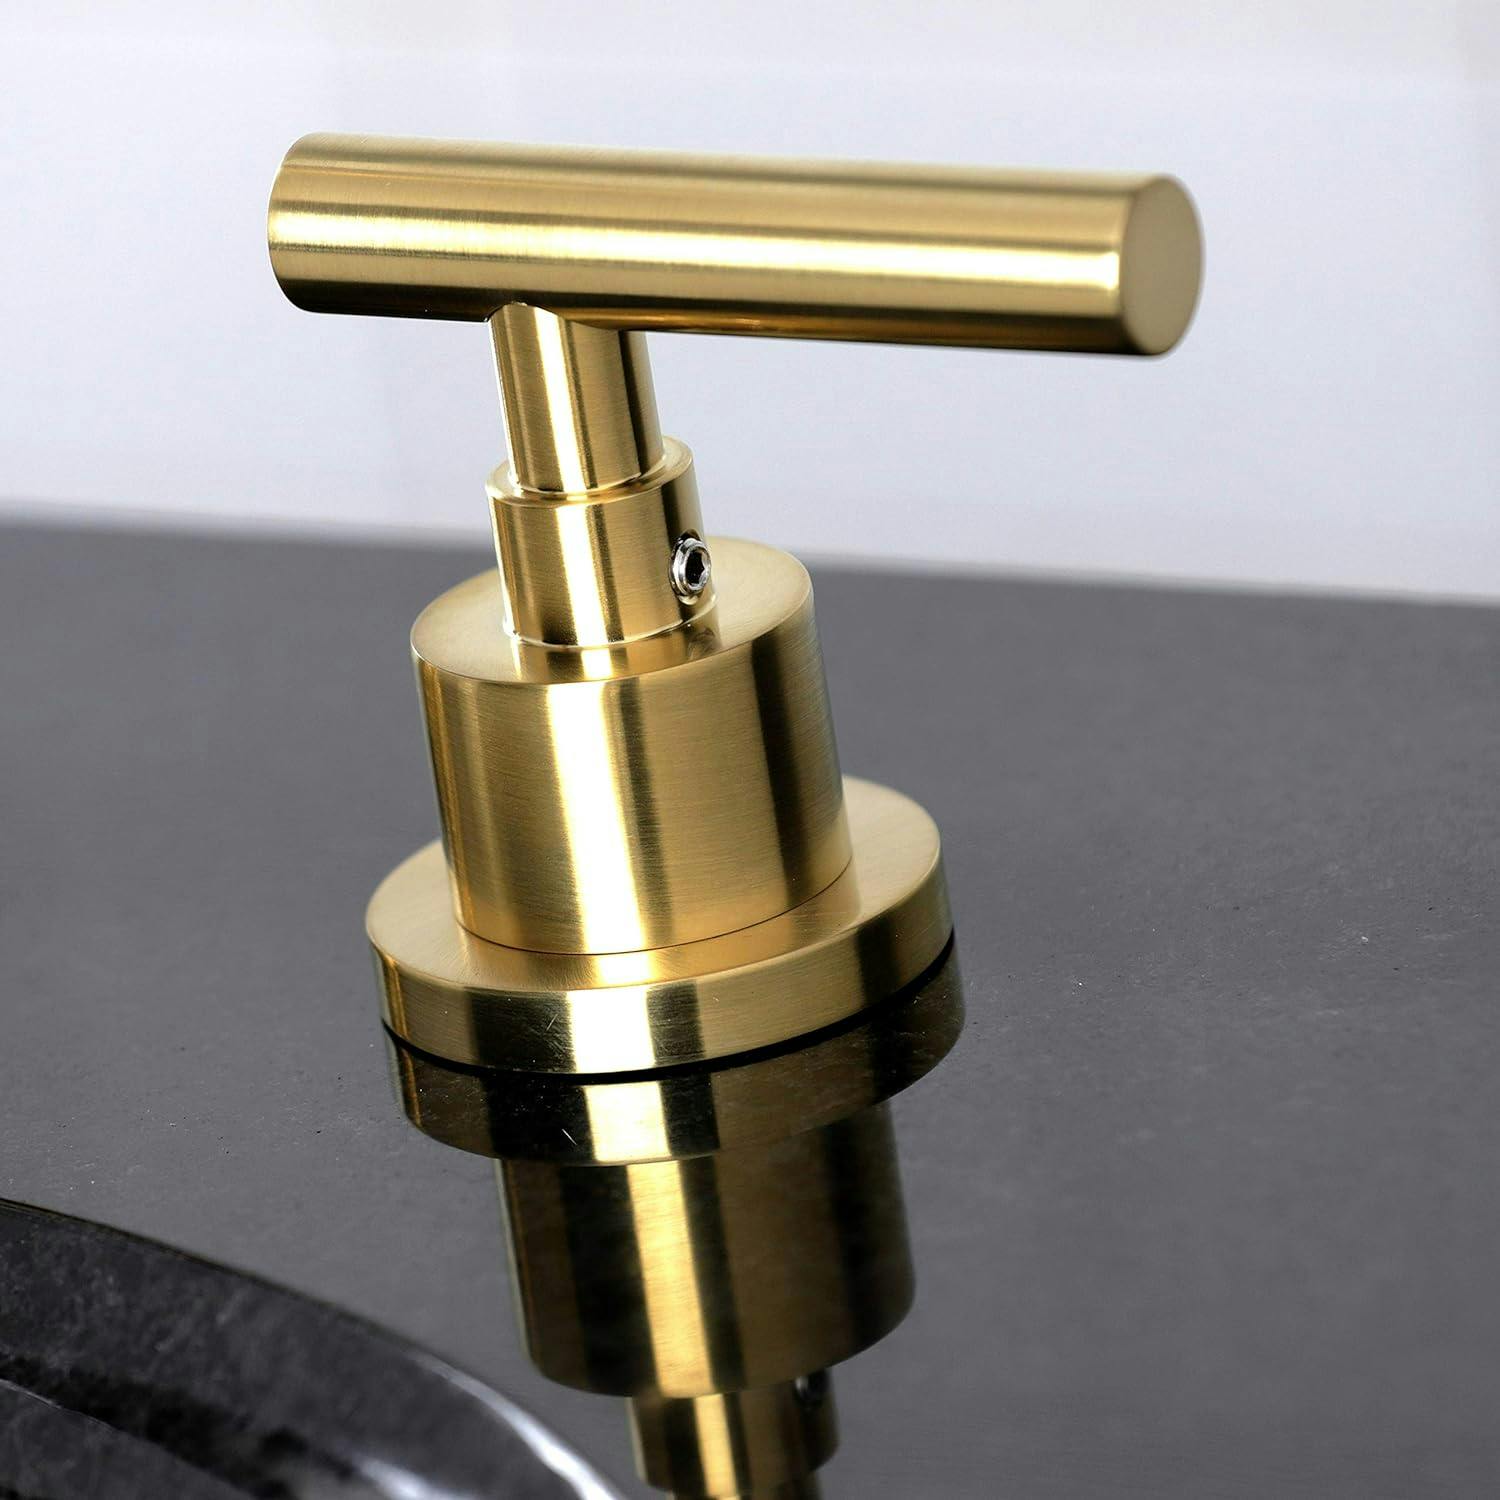 Manhattan 9.5" Polished Nickel Modern Widespread Bathroom Faucet